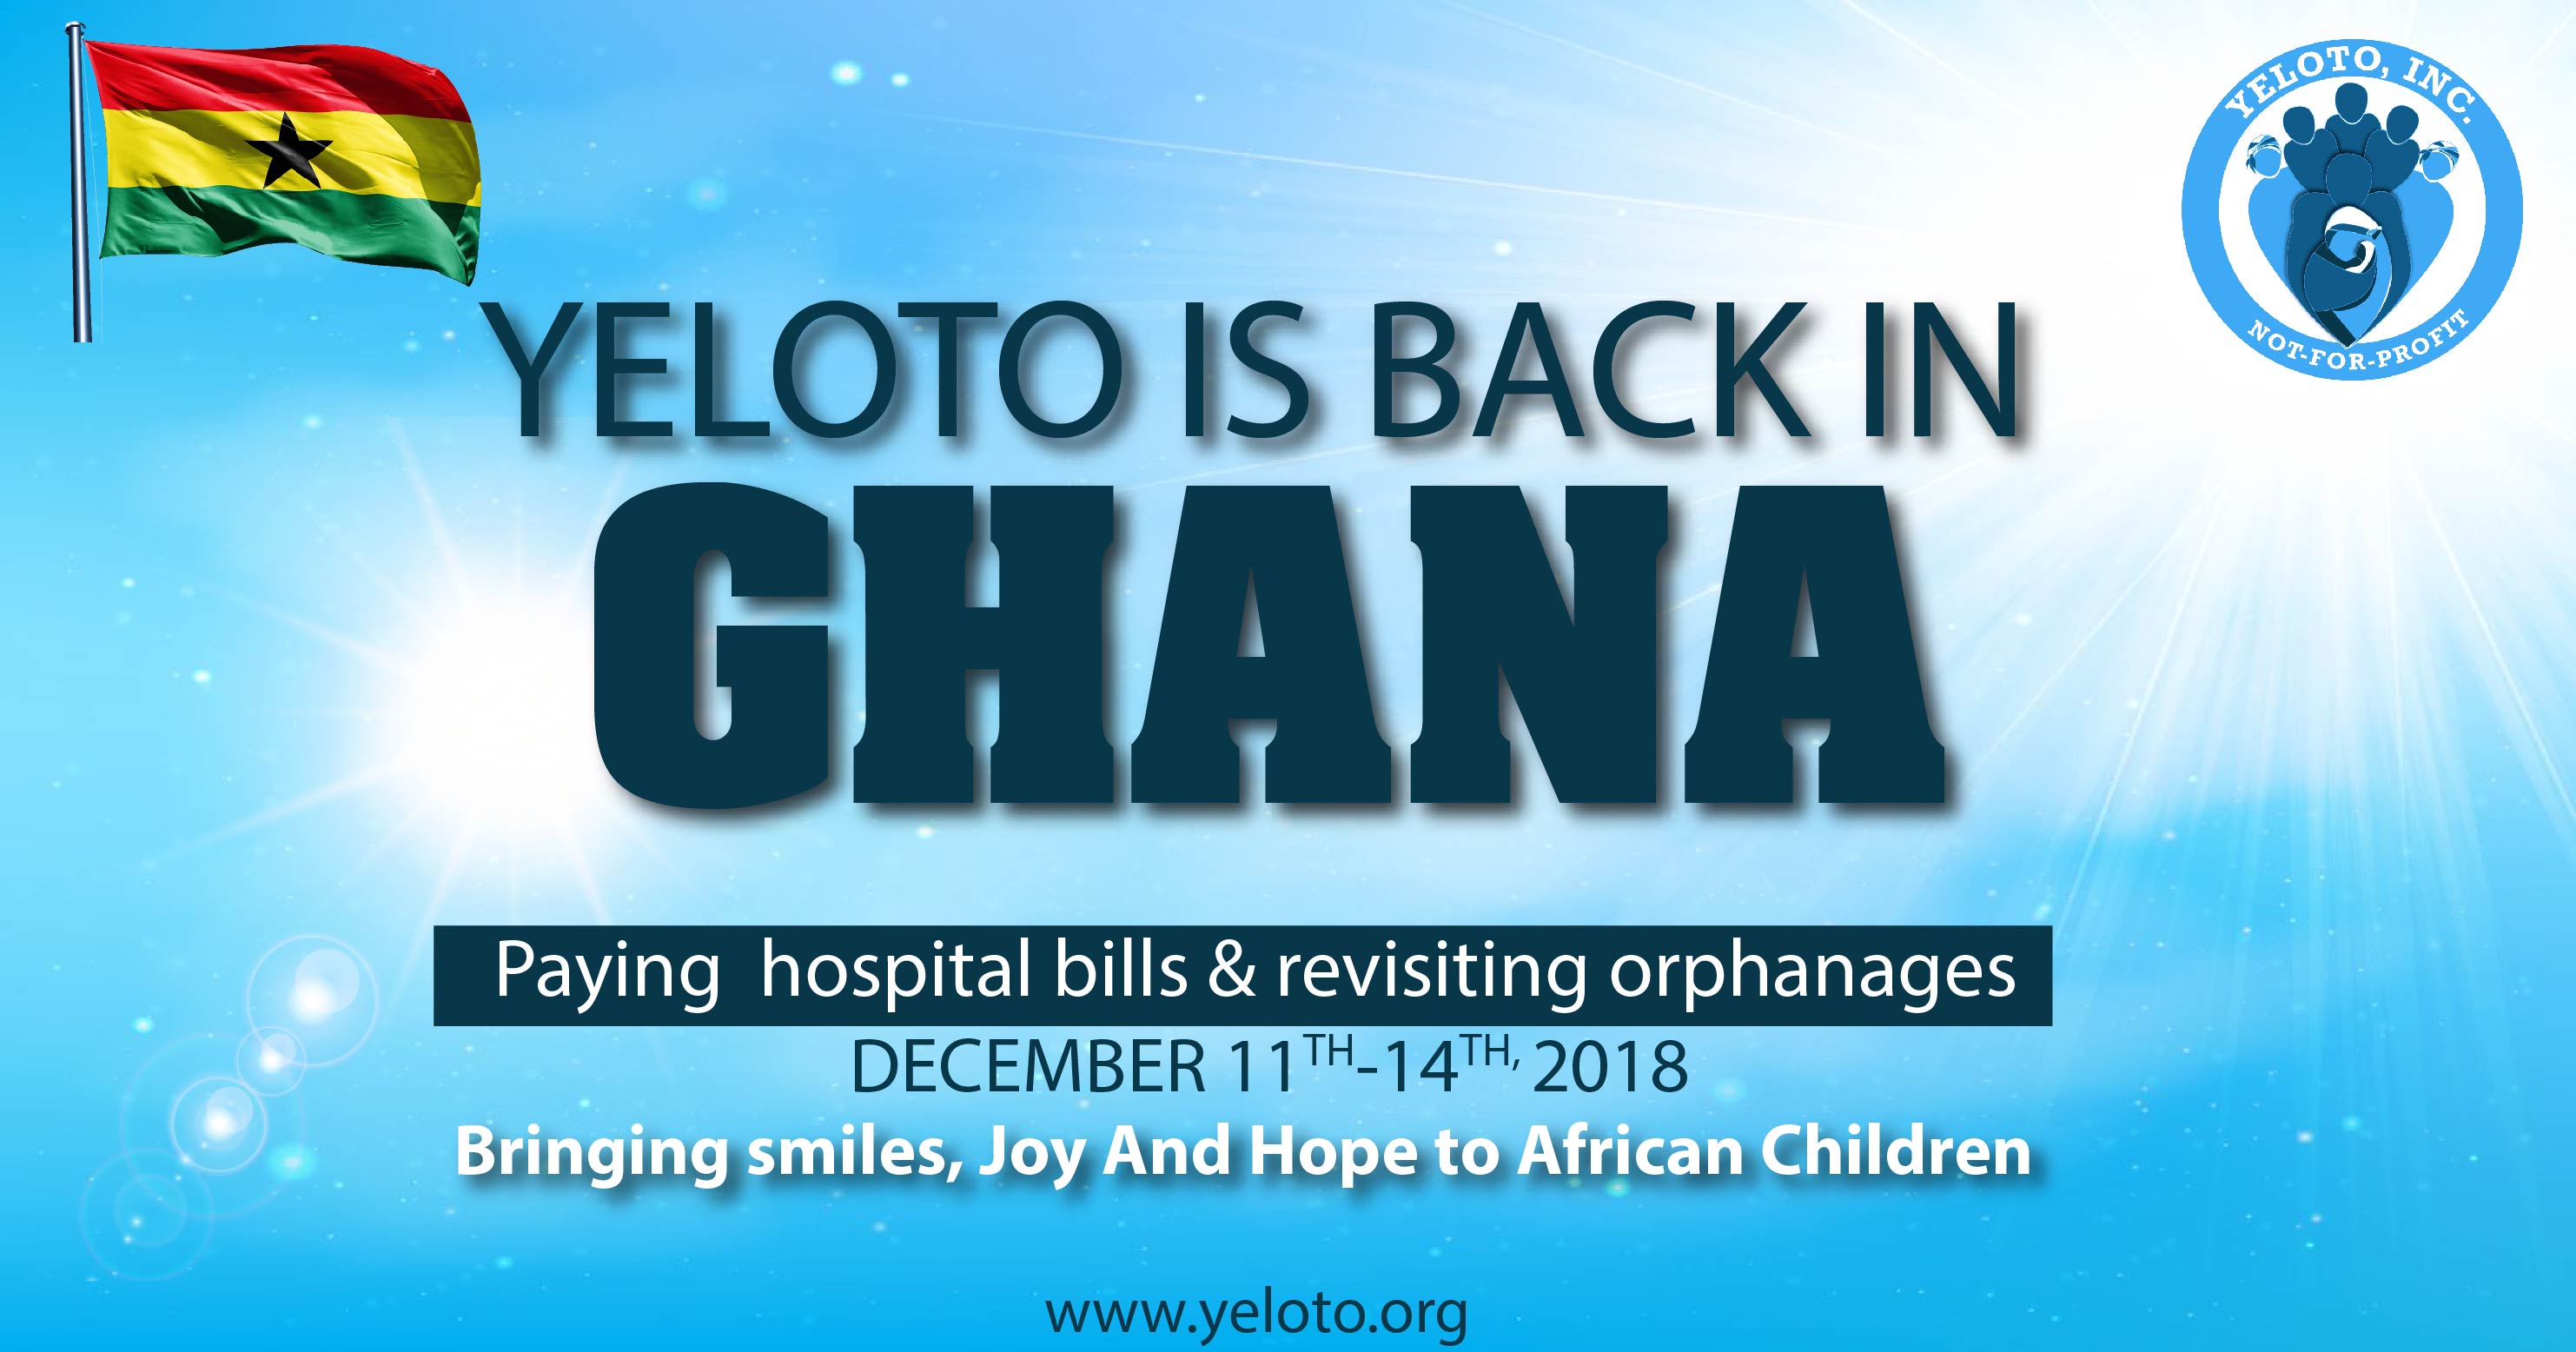 Yeloto African Children Foundation visits Ghana in December